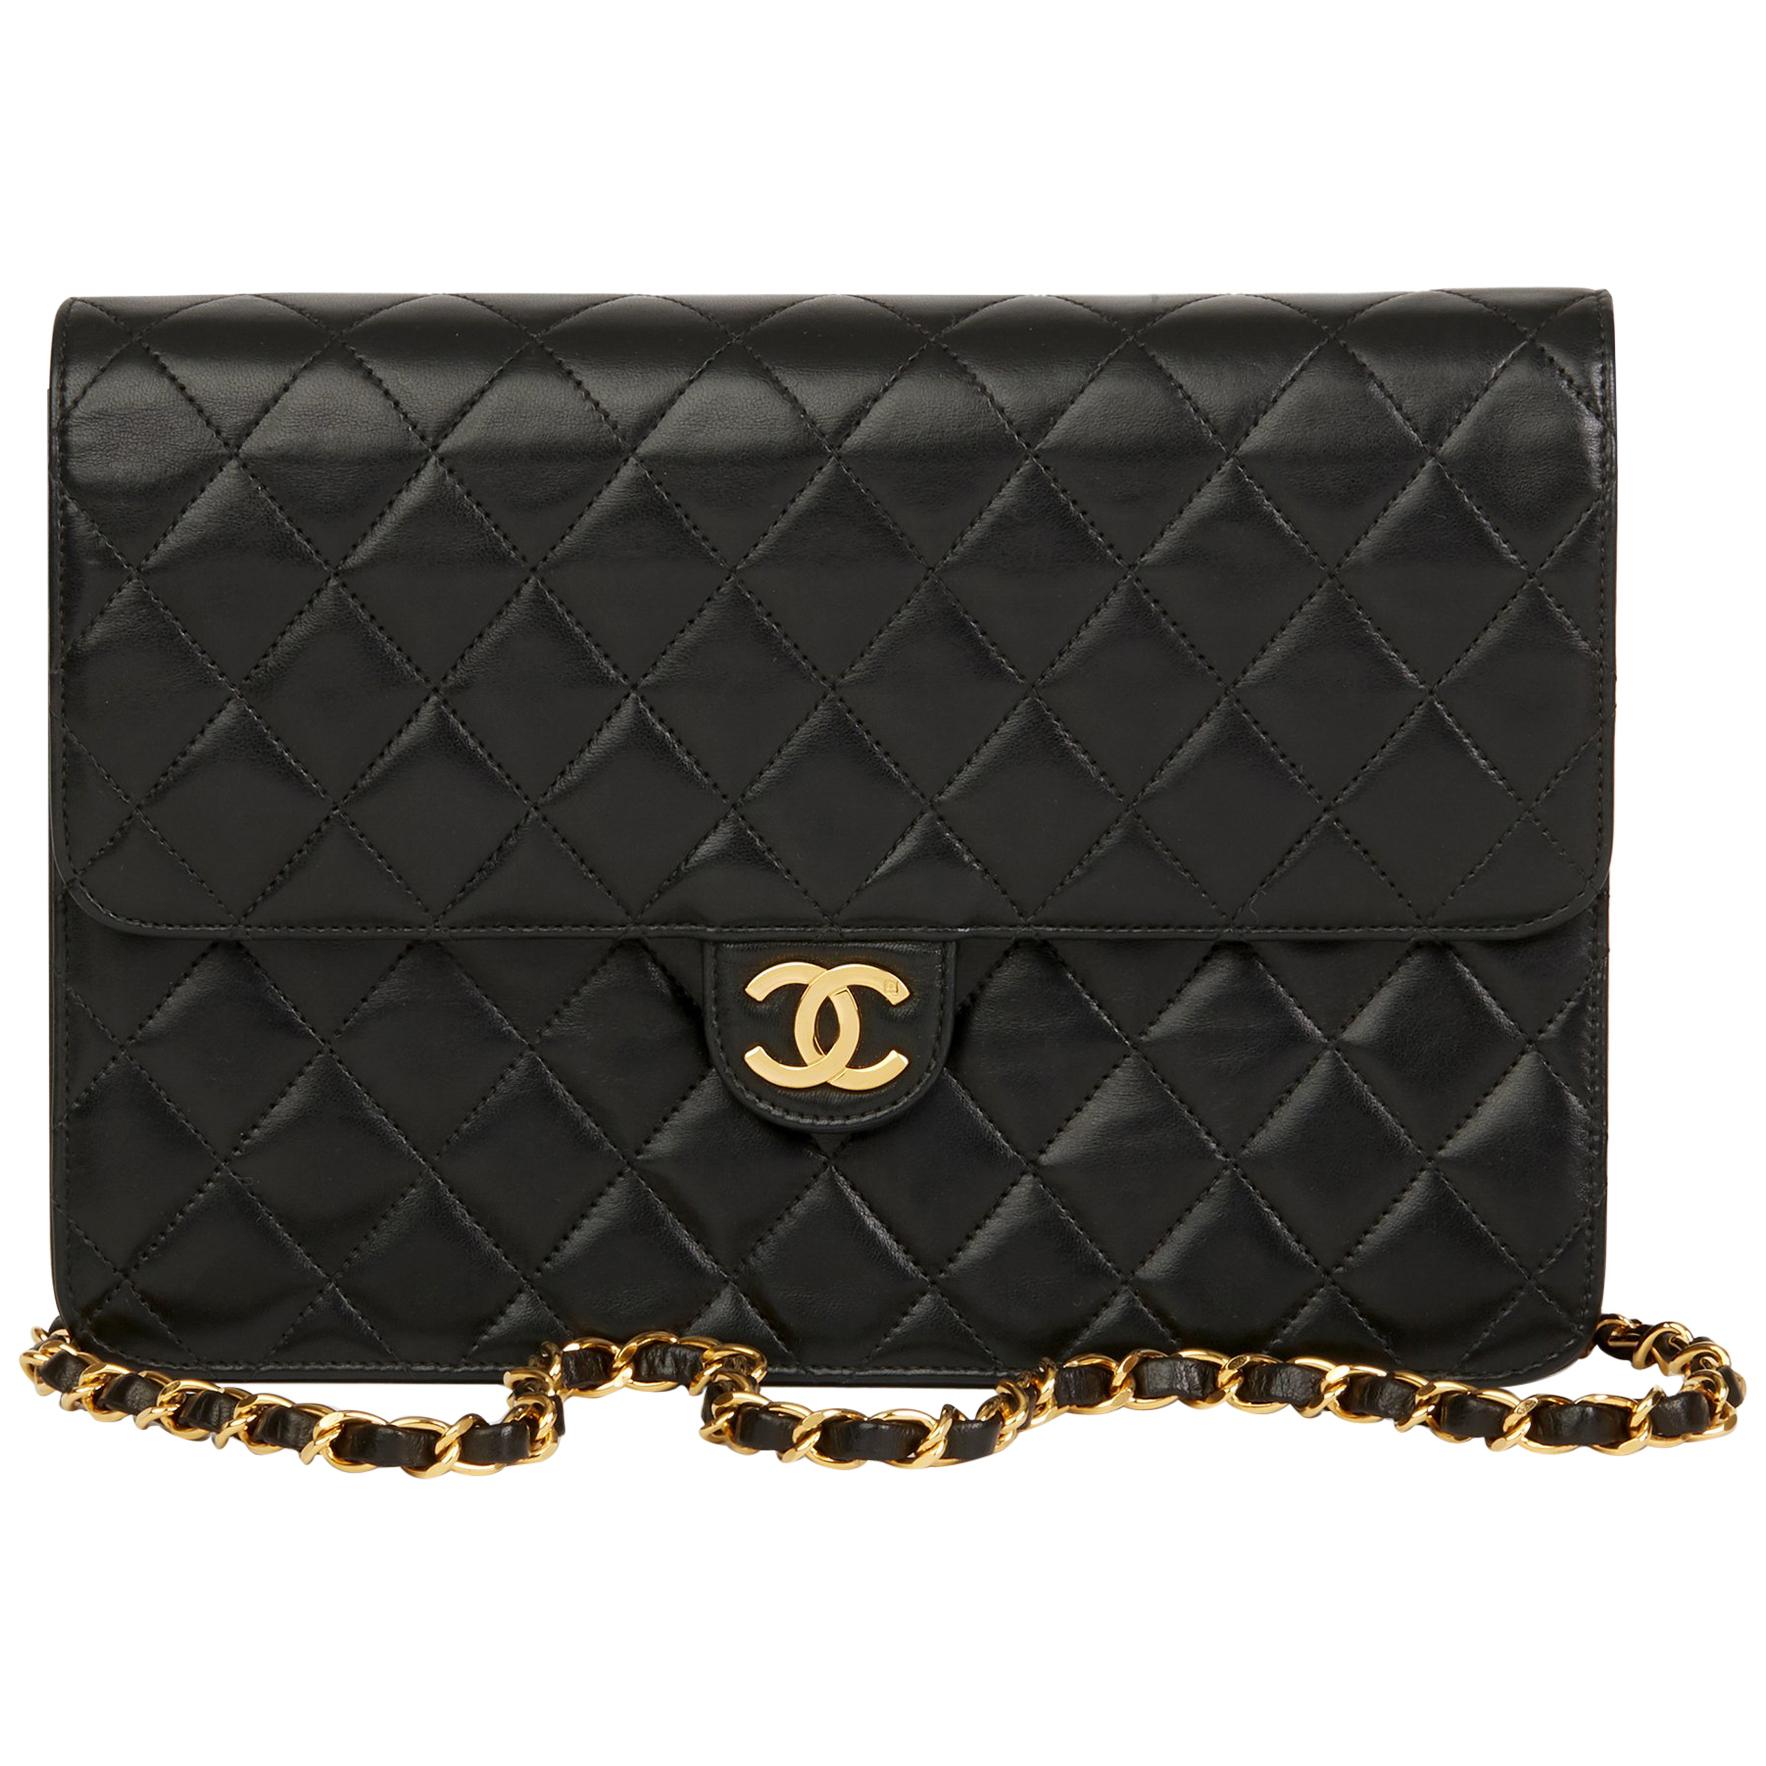 1996 Chanel Black Quilted Lambskin Vintage Medium Classic Single Flap Bag